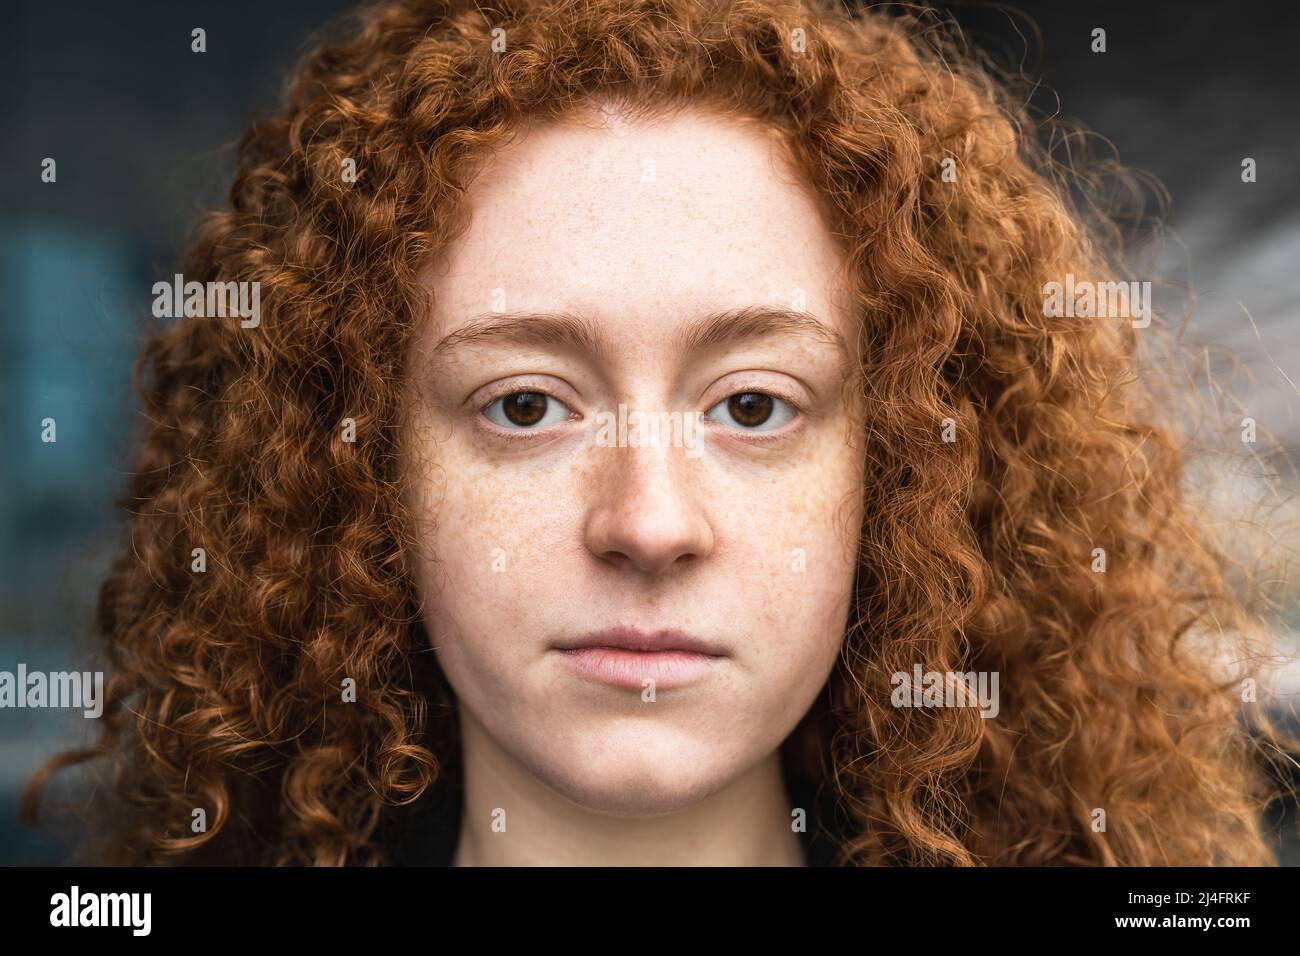 Closeup portrait of redhead girl looking at camera Stock Photo